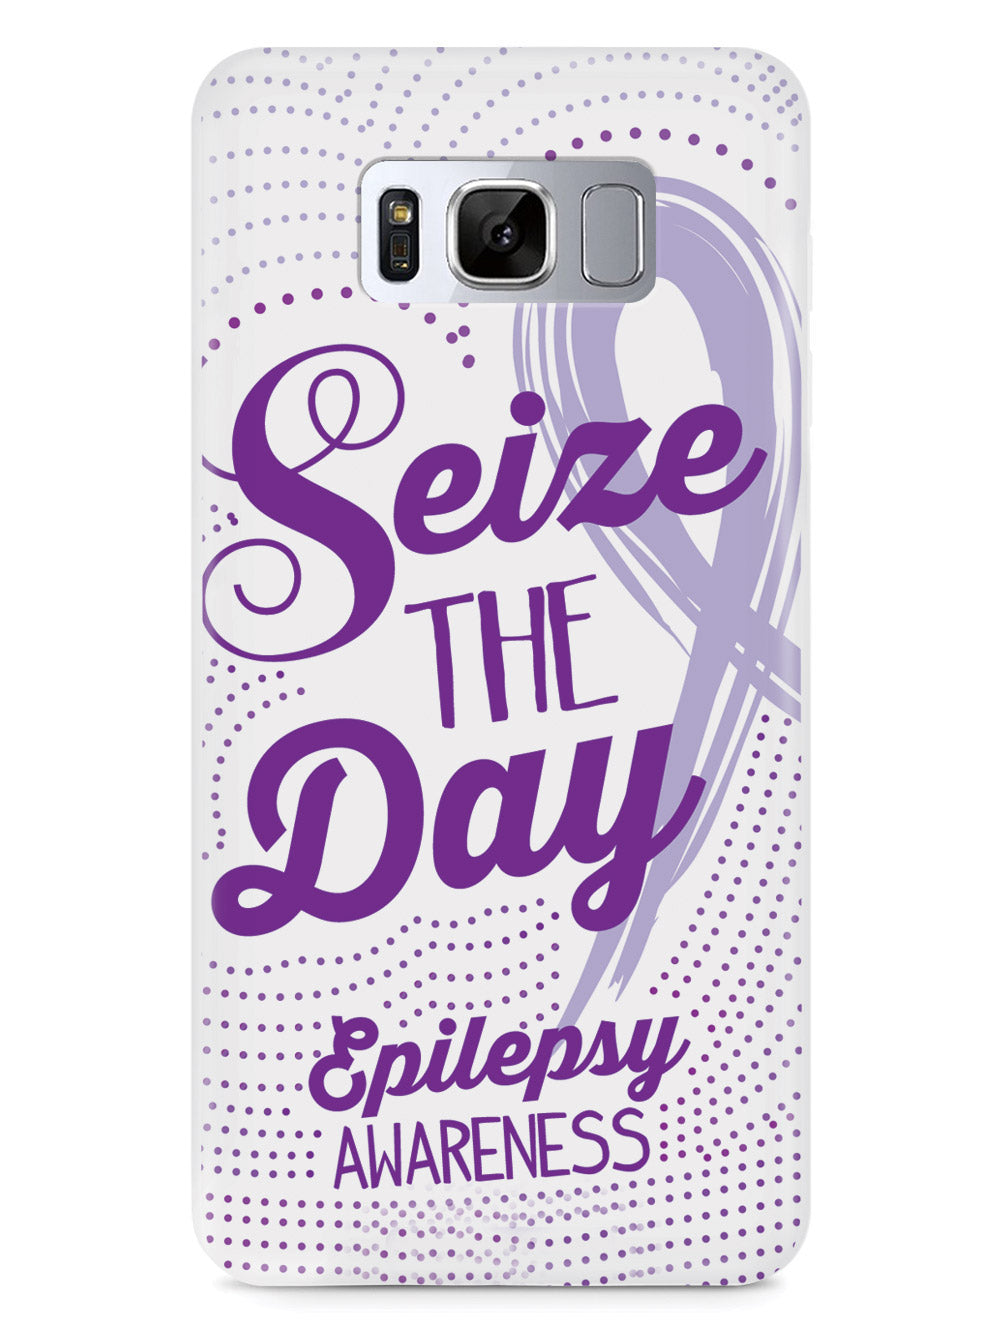 Seize the Day, Epilepsy Awareness Case